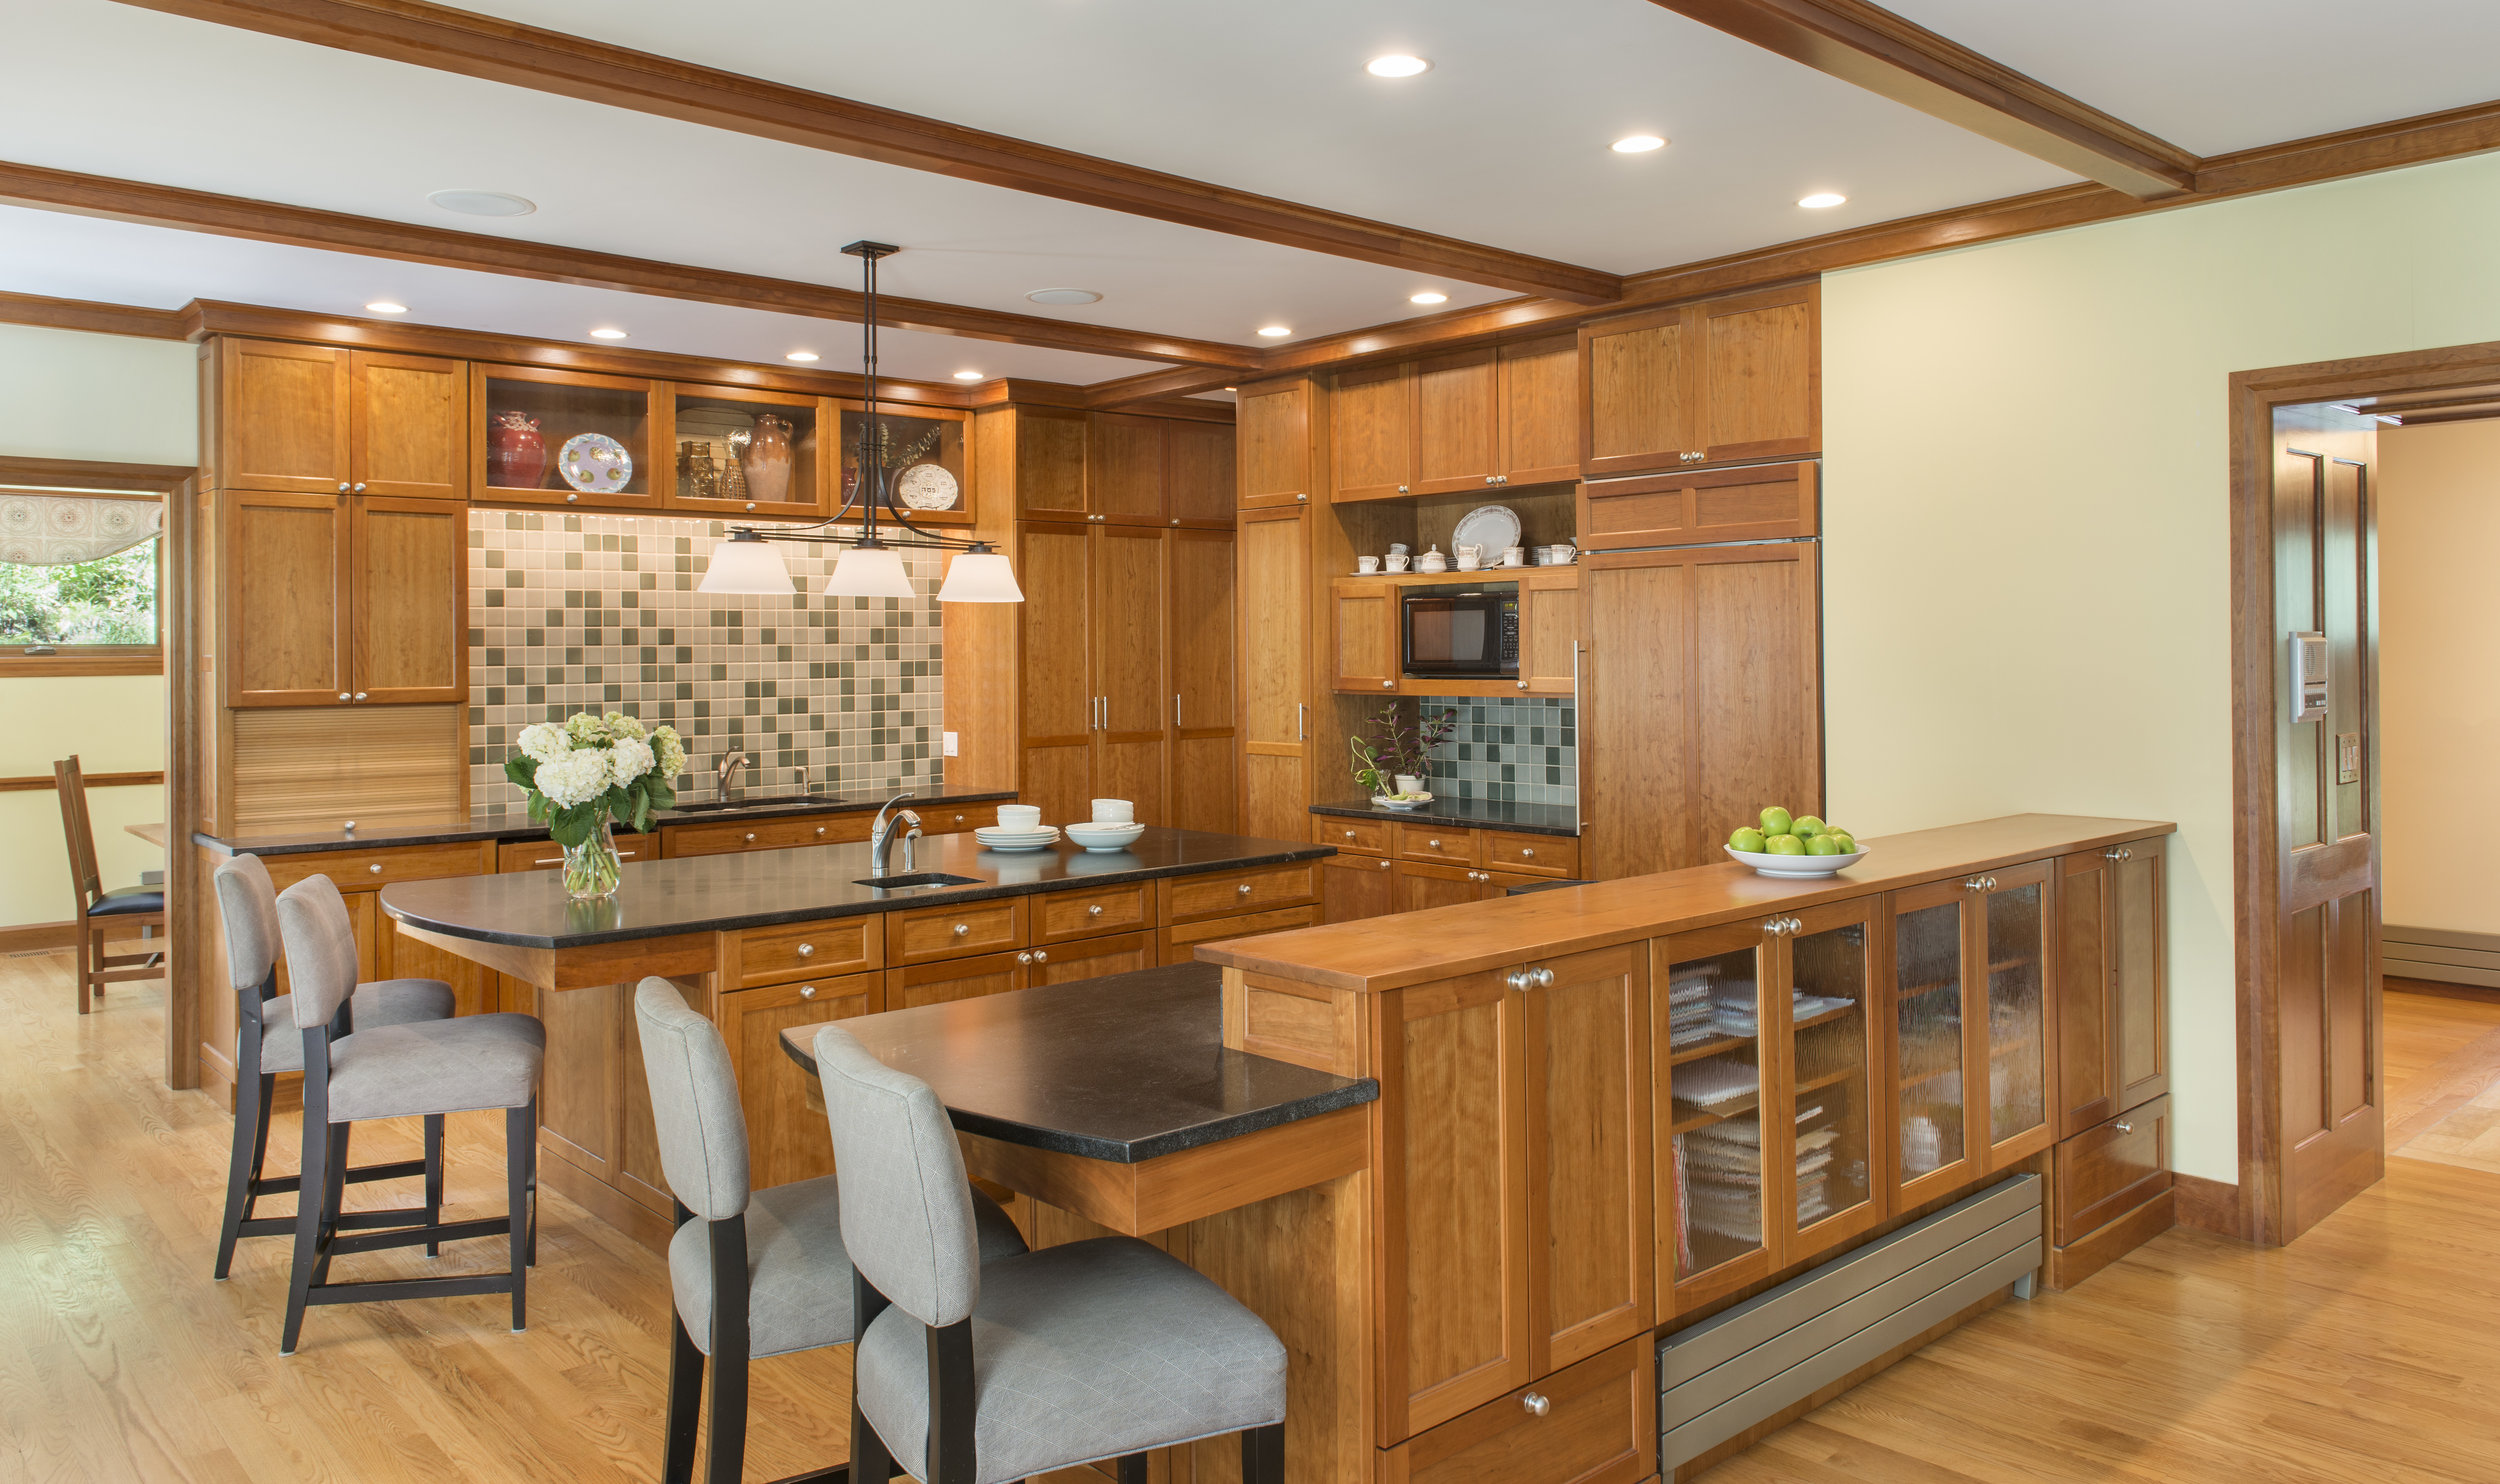 Custom kitchen with wood beams